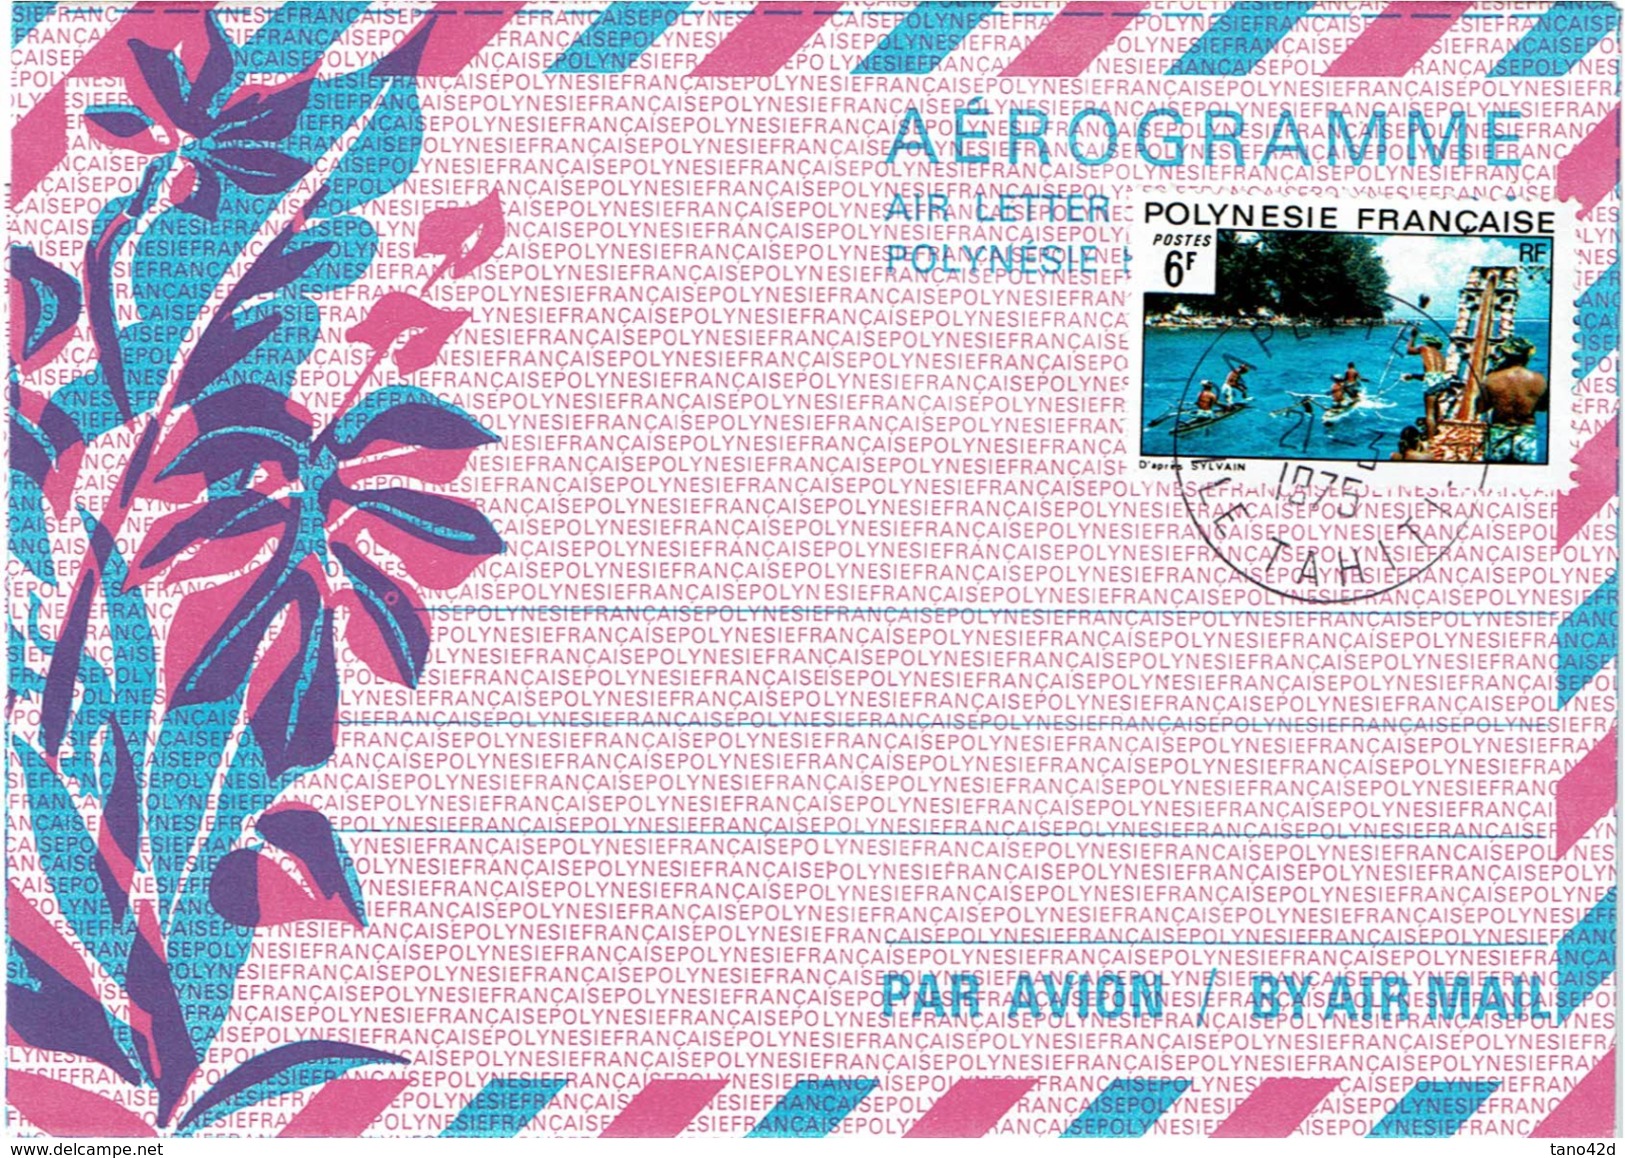 REF BR39 - POLYNESIE FRANCAISE - AEROGRAMME N°1 20F AVEC TPM 6F OBL. - Aerograms